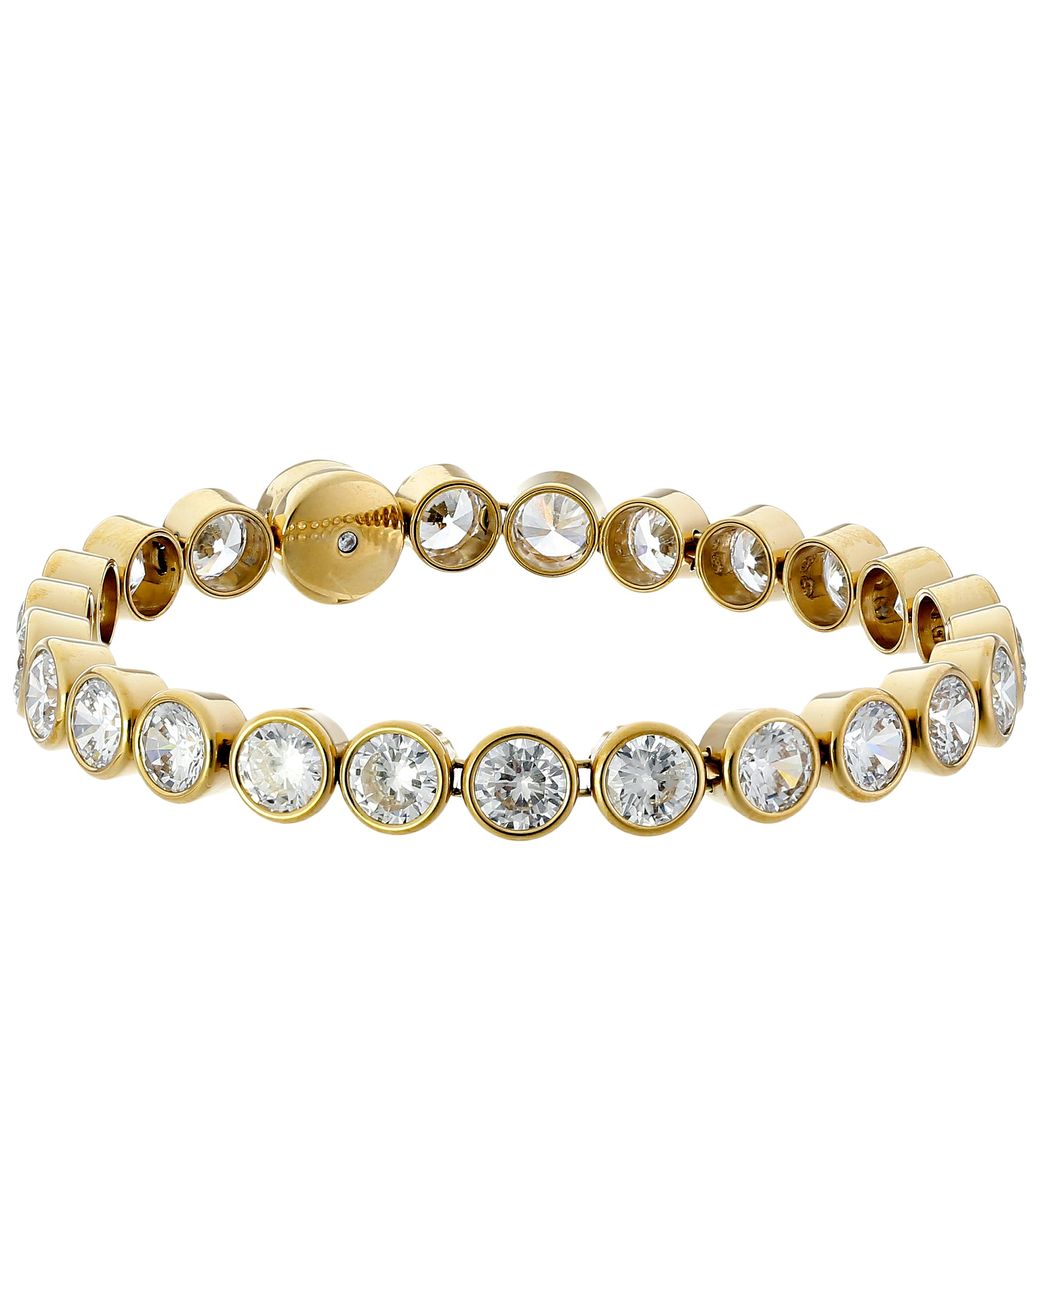 Michael Kors MK Logo Yellow Gold Bangle Bracelet Crystals Pave MKJ5976710 +  BOX | eBay